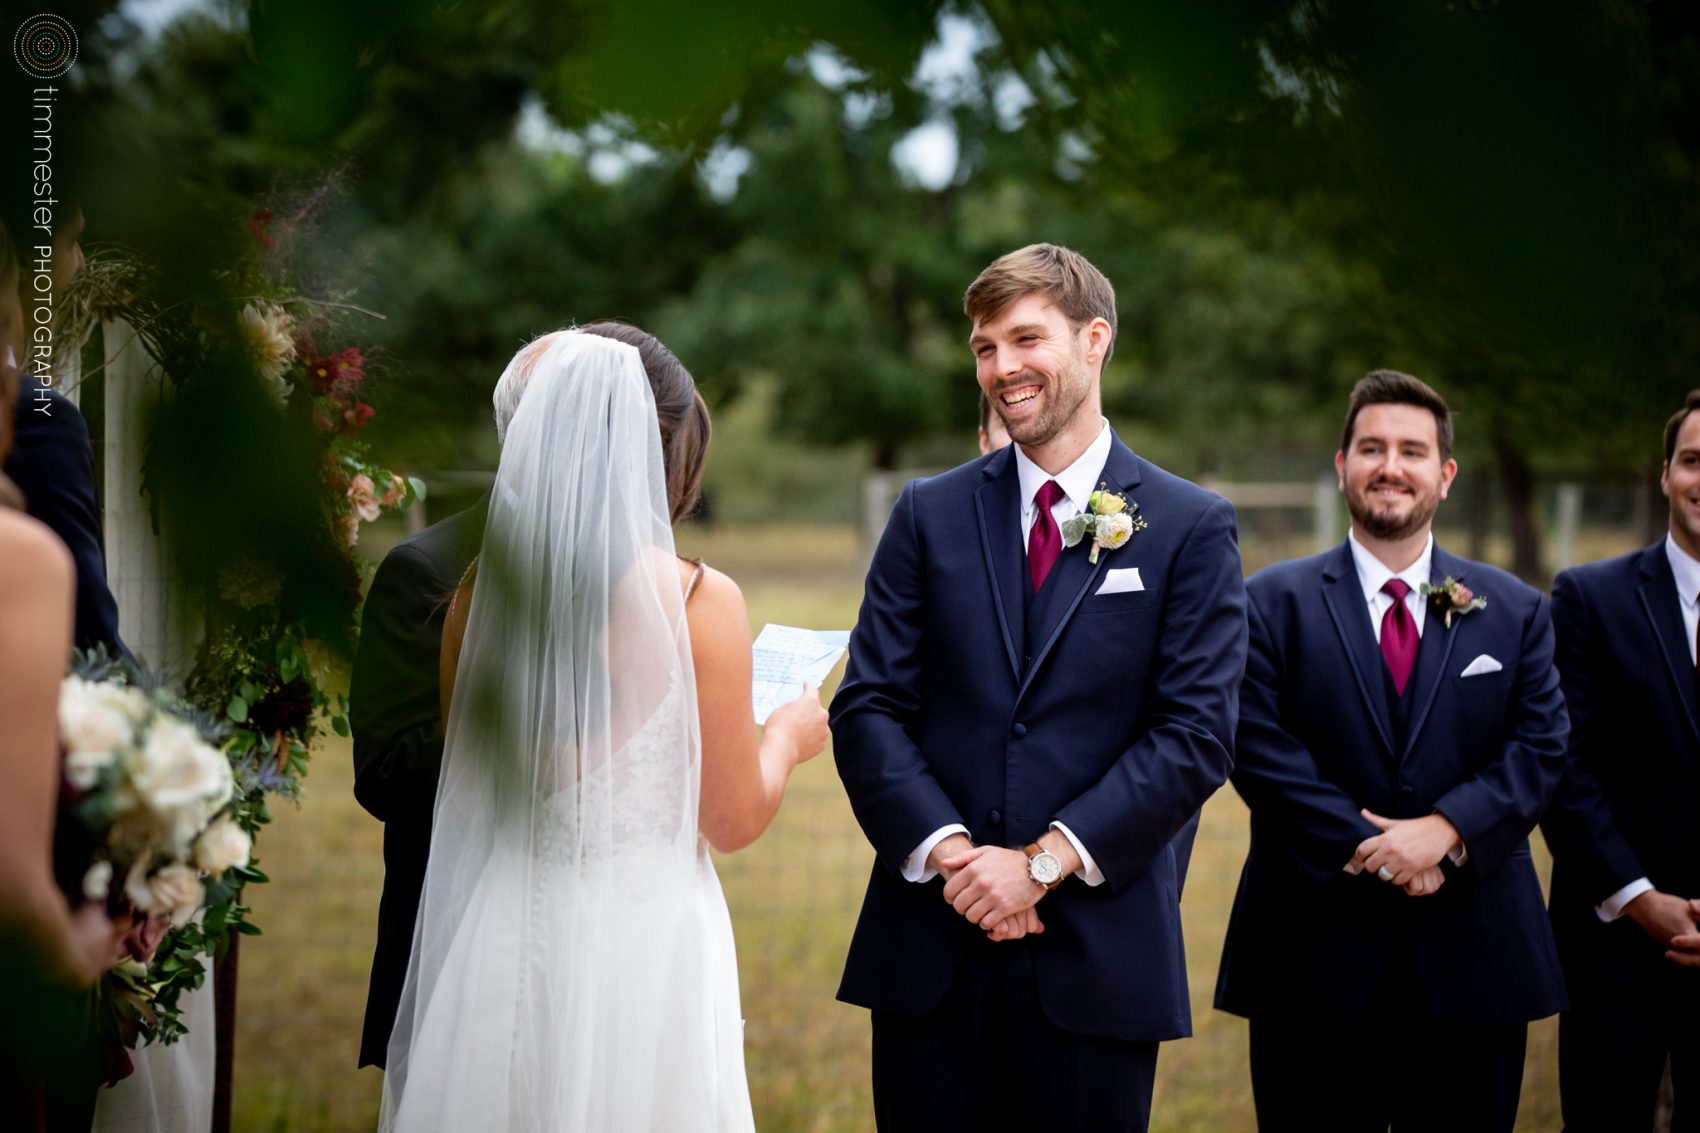 An outdoor wedding ceremony in North Carolina at Sassafras Fork Farm.